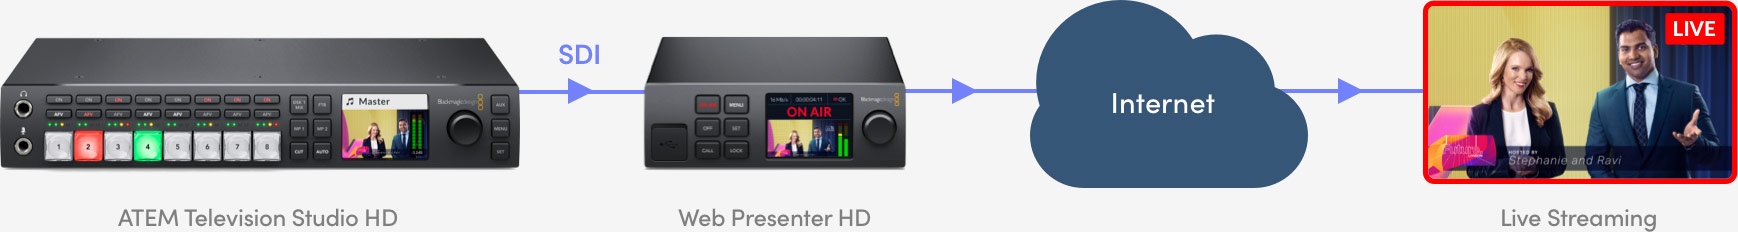 Web Presenter HD connection scheme